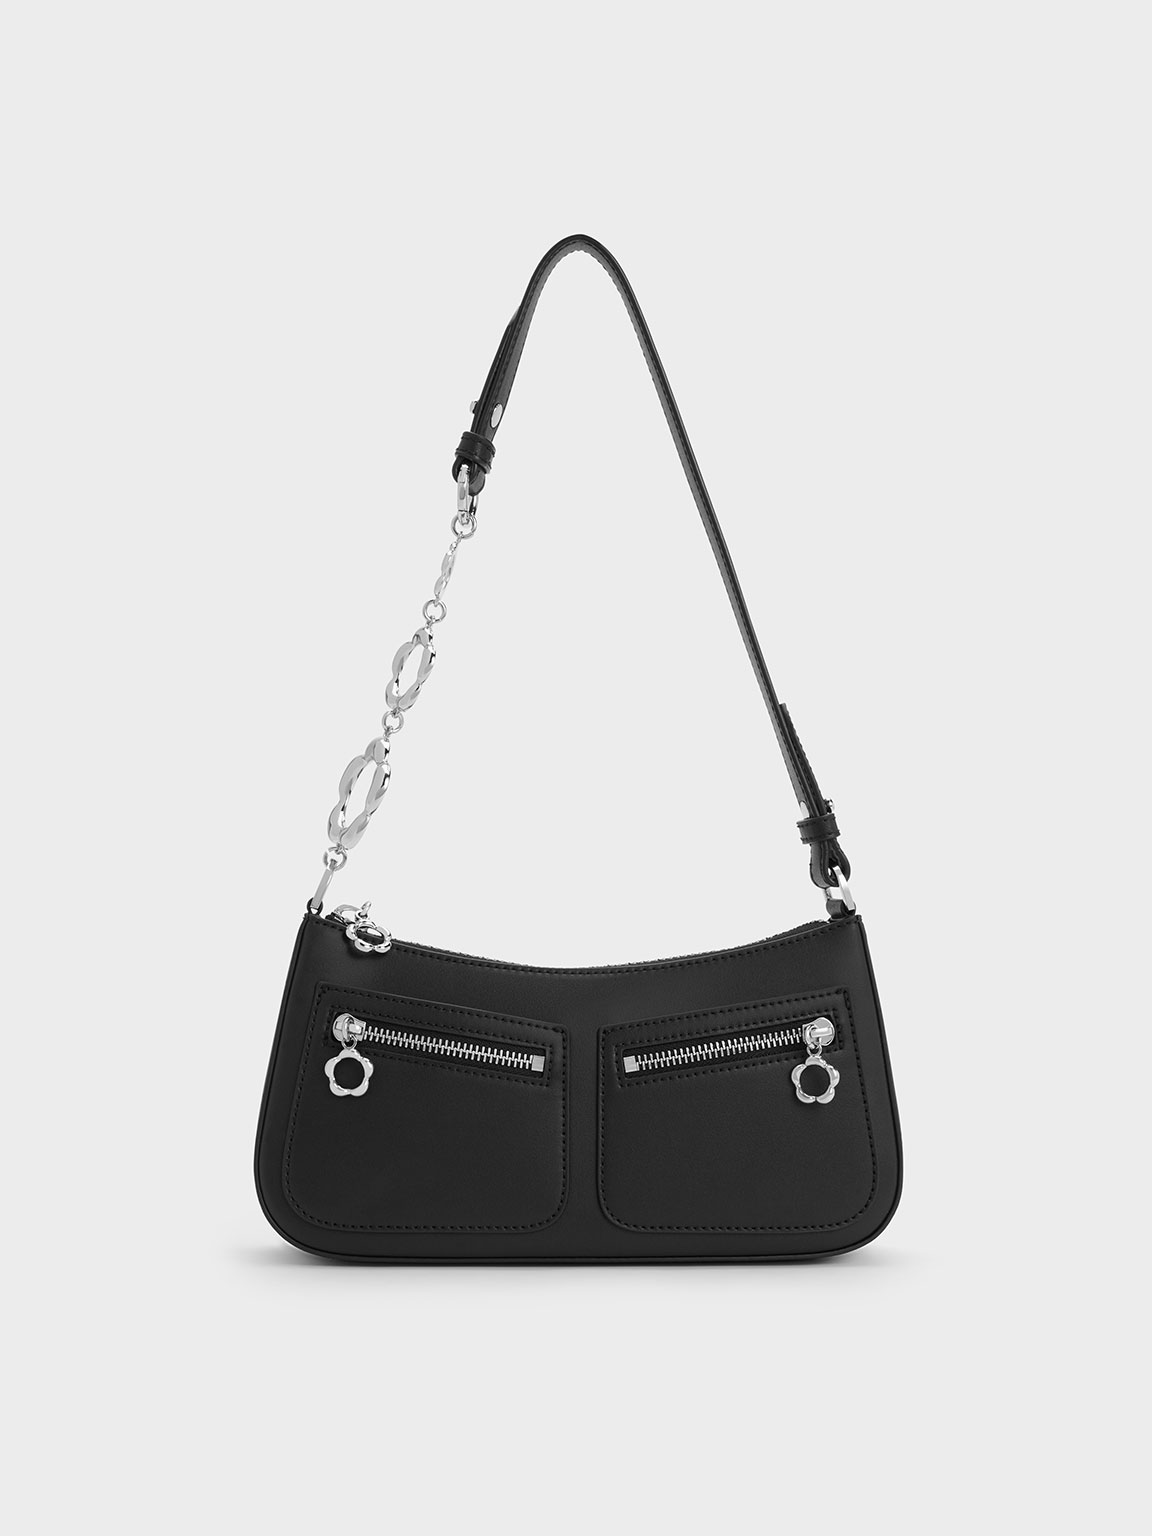 90's mini shoulder bags: black and silver hardware edition 🖤 : r/handbags